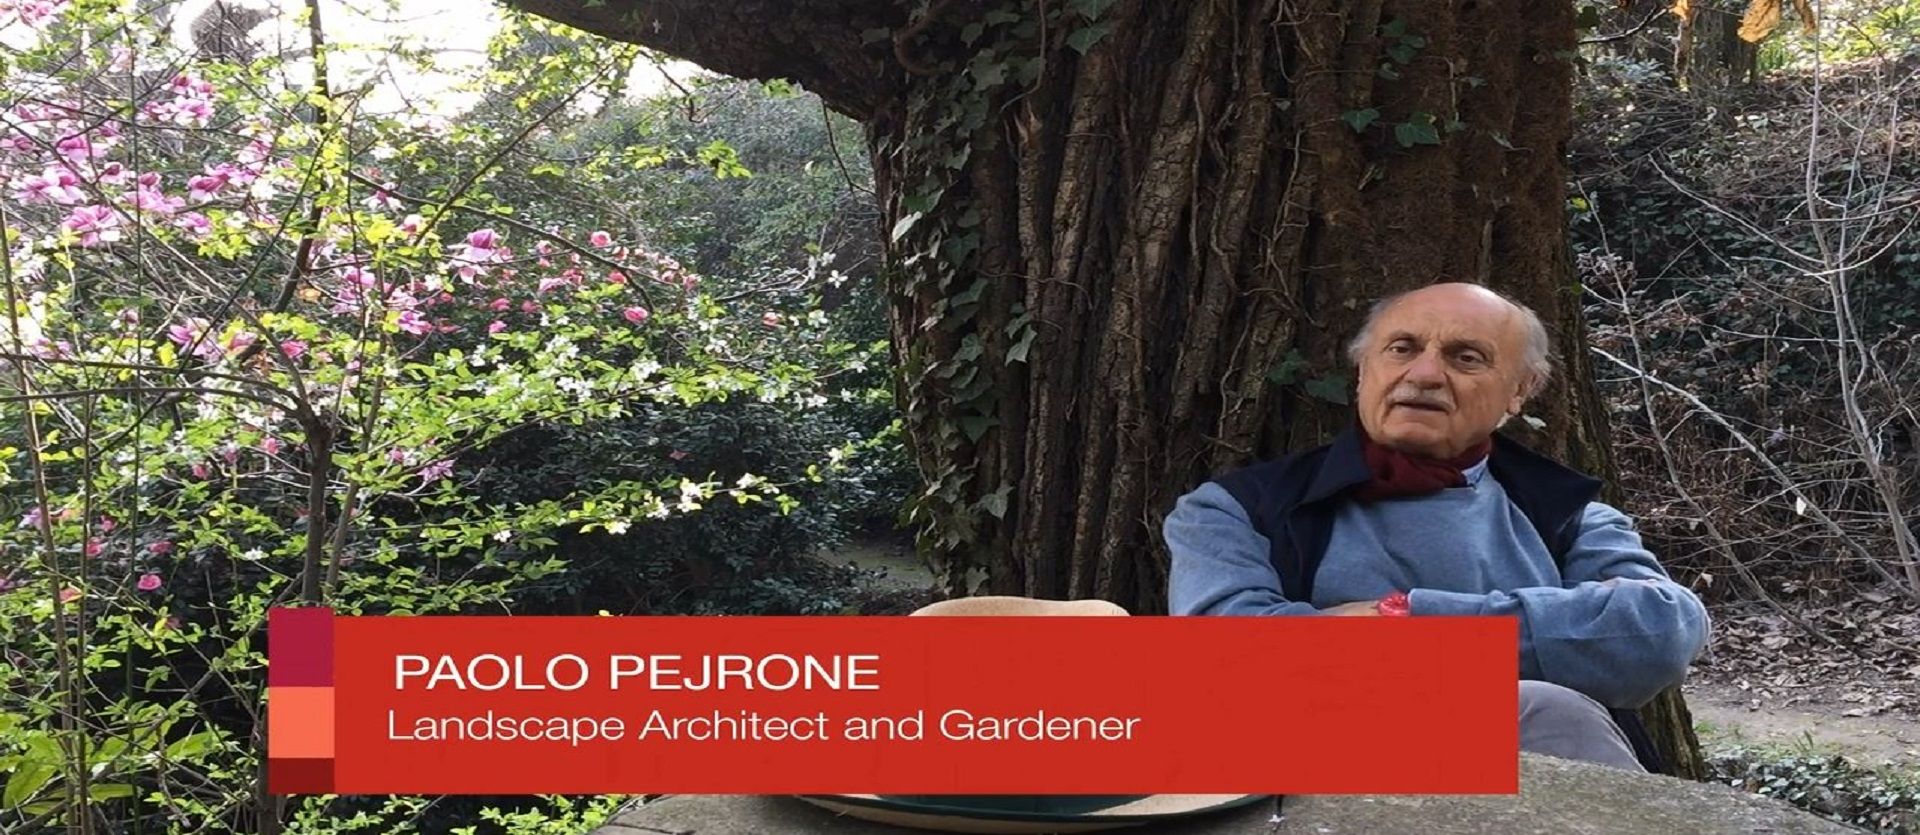 Venice Gardens Foundation awarded the “Premio CULTURA + IMPRESA 2017- 2018”, Art Bonus category, for the restoration project of the Royal Gardens of Venice